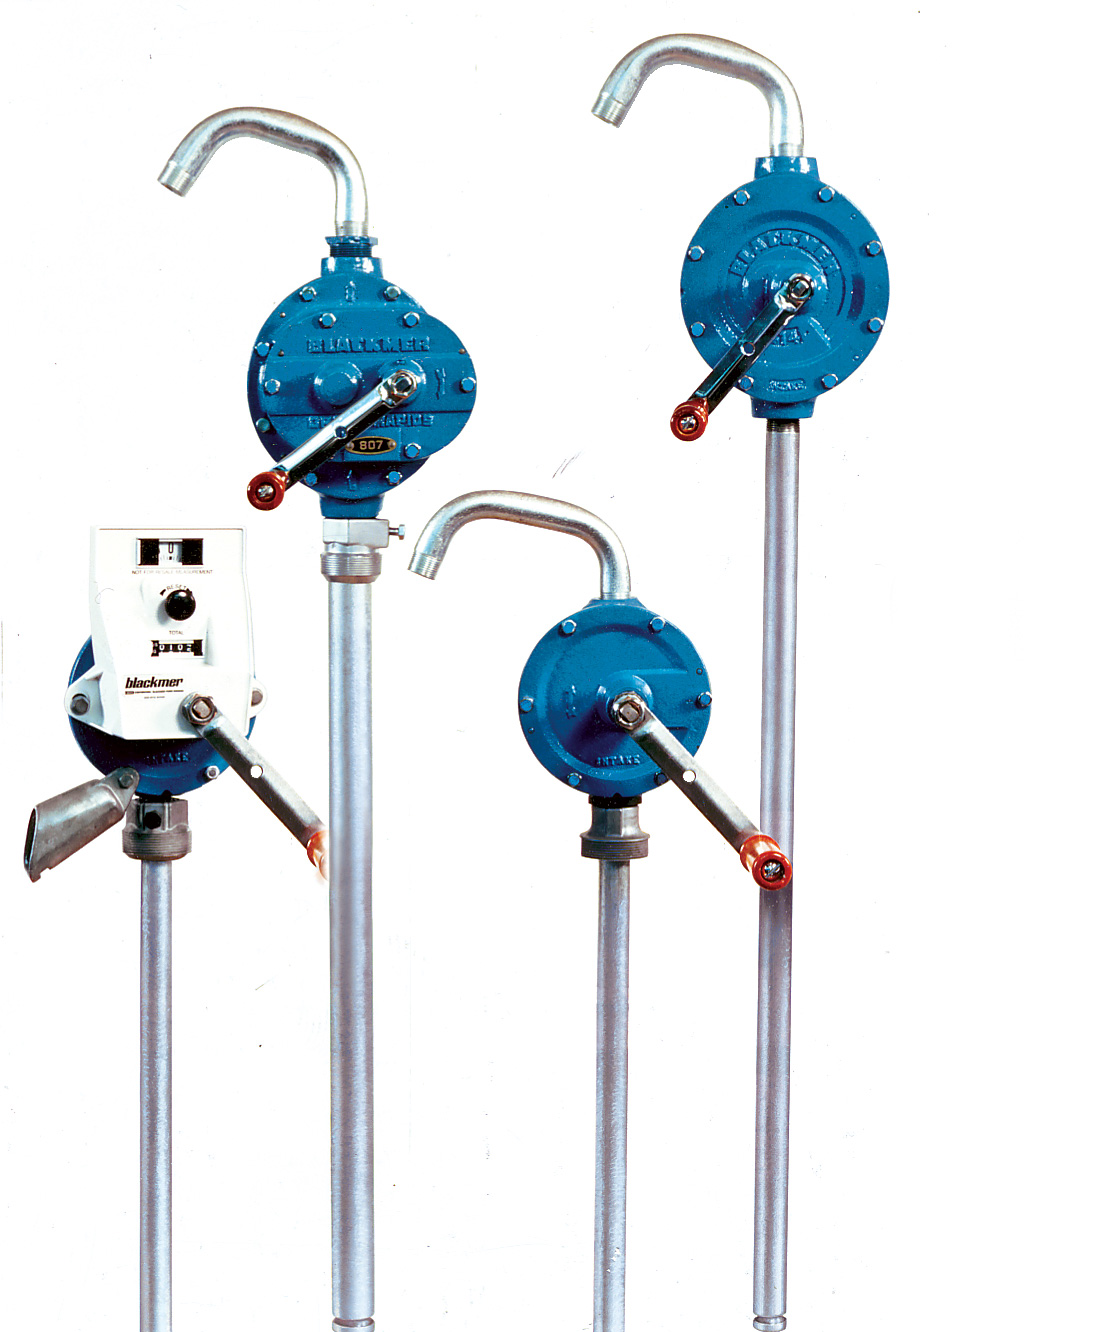 Sliding Vane design allows pump to self-adjust reducing maintenance intervals and keep performance consistent